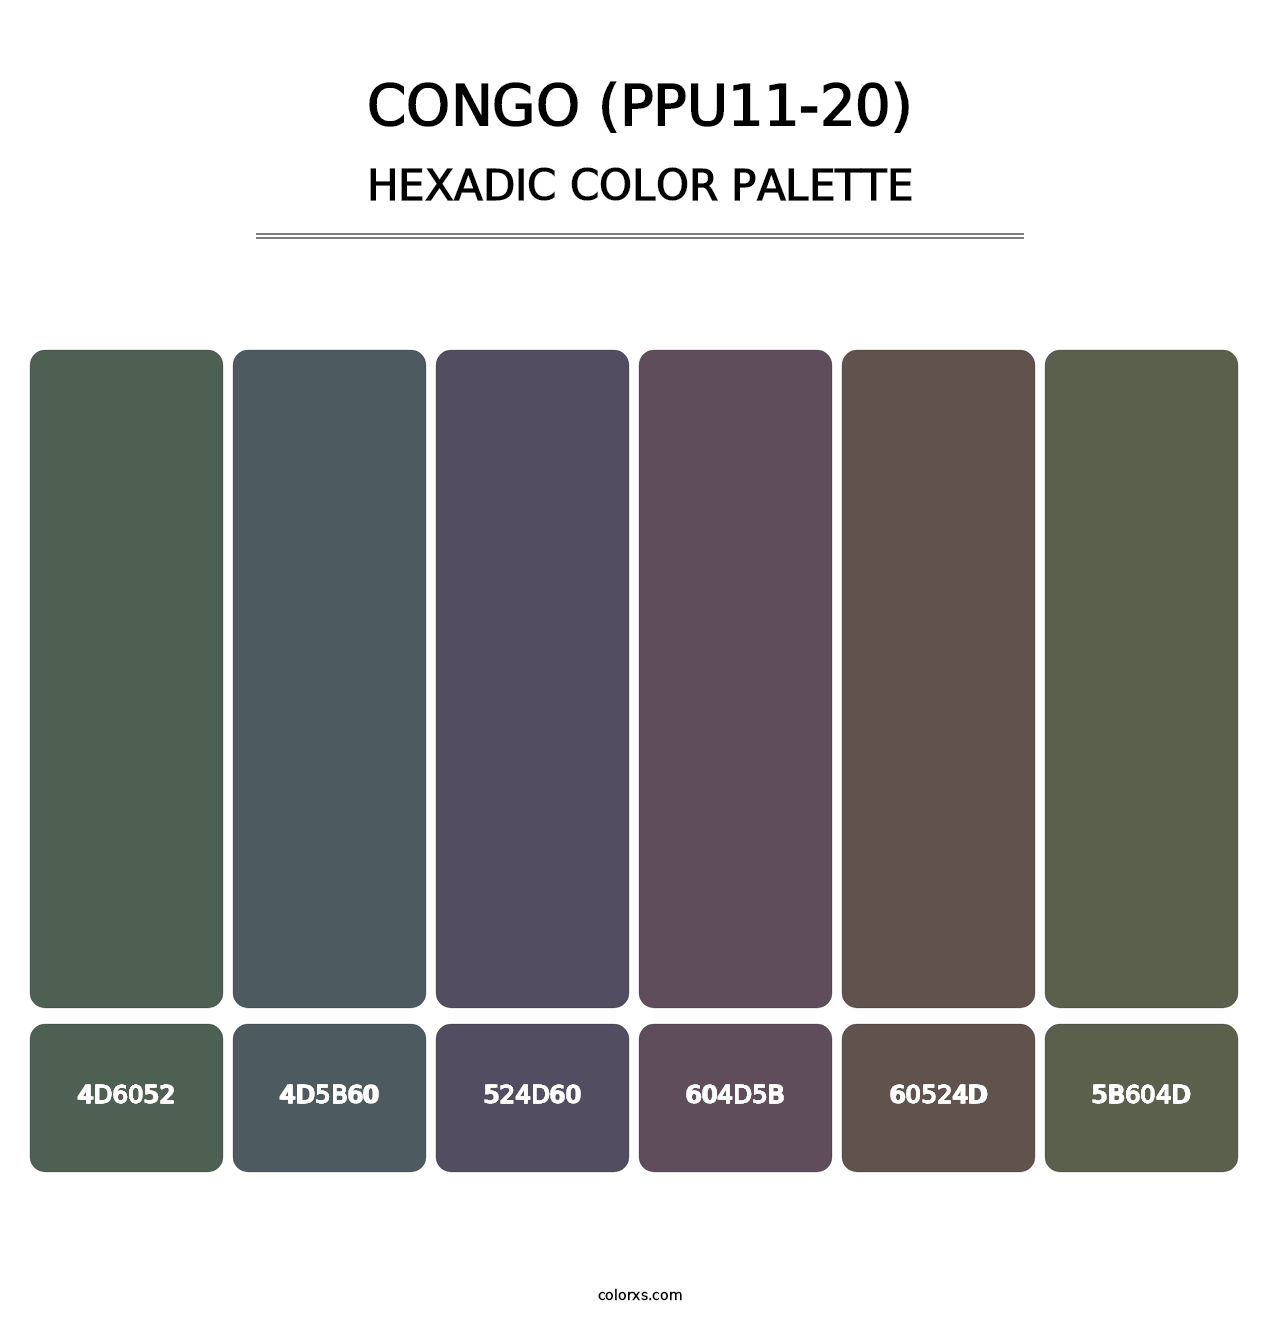 Congo (PPU11-20) - Hexadic Color Palette